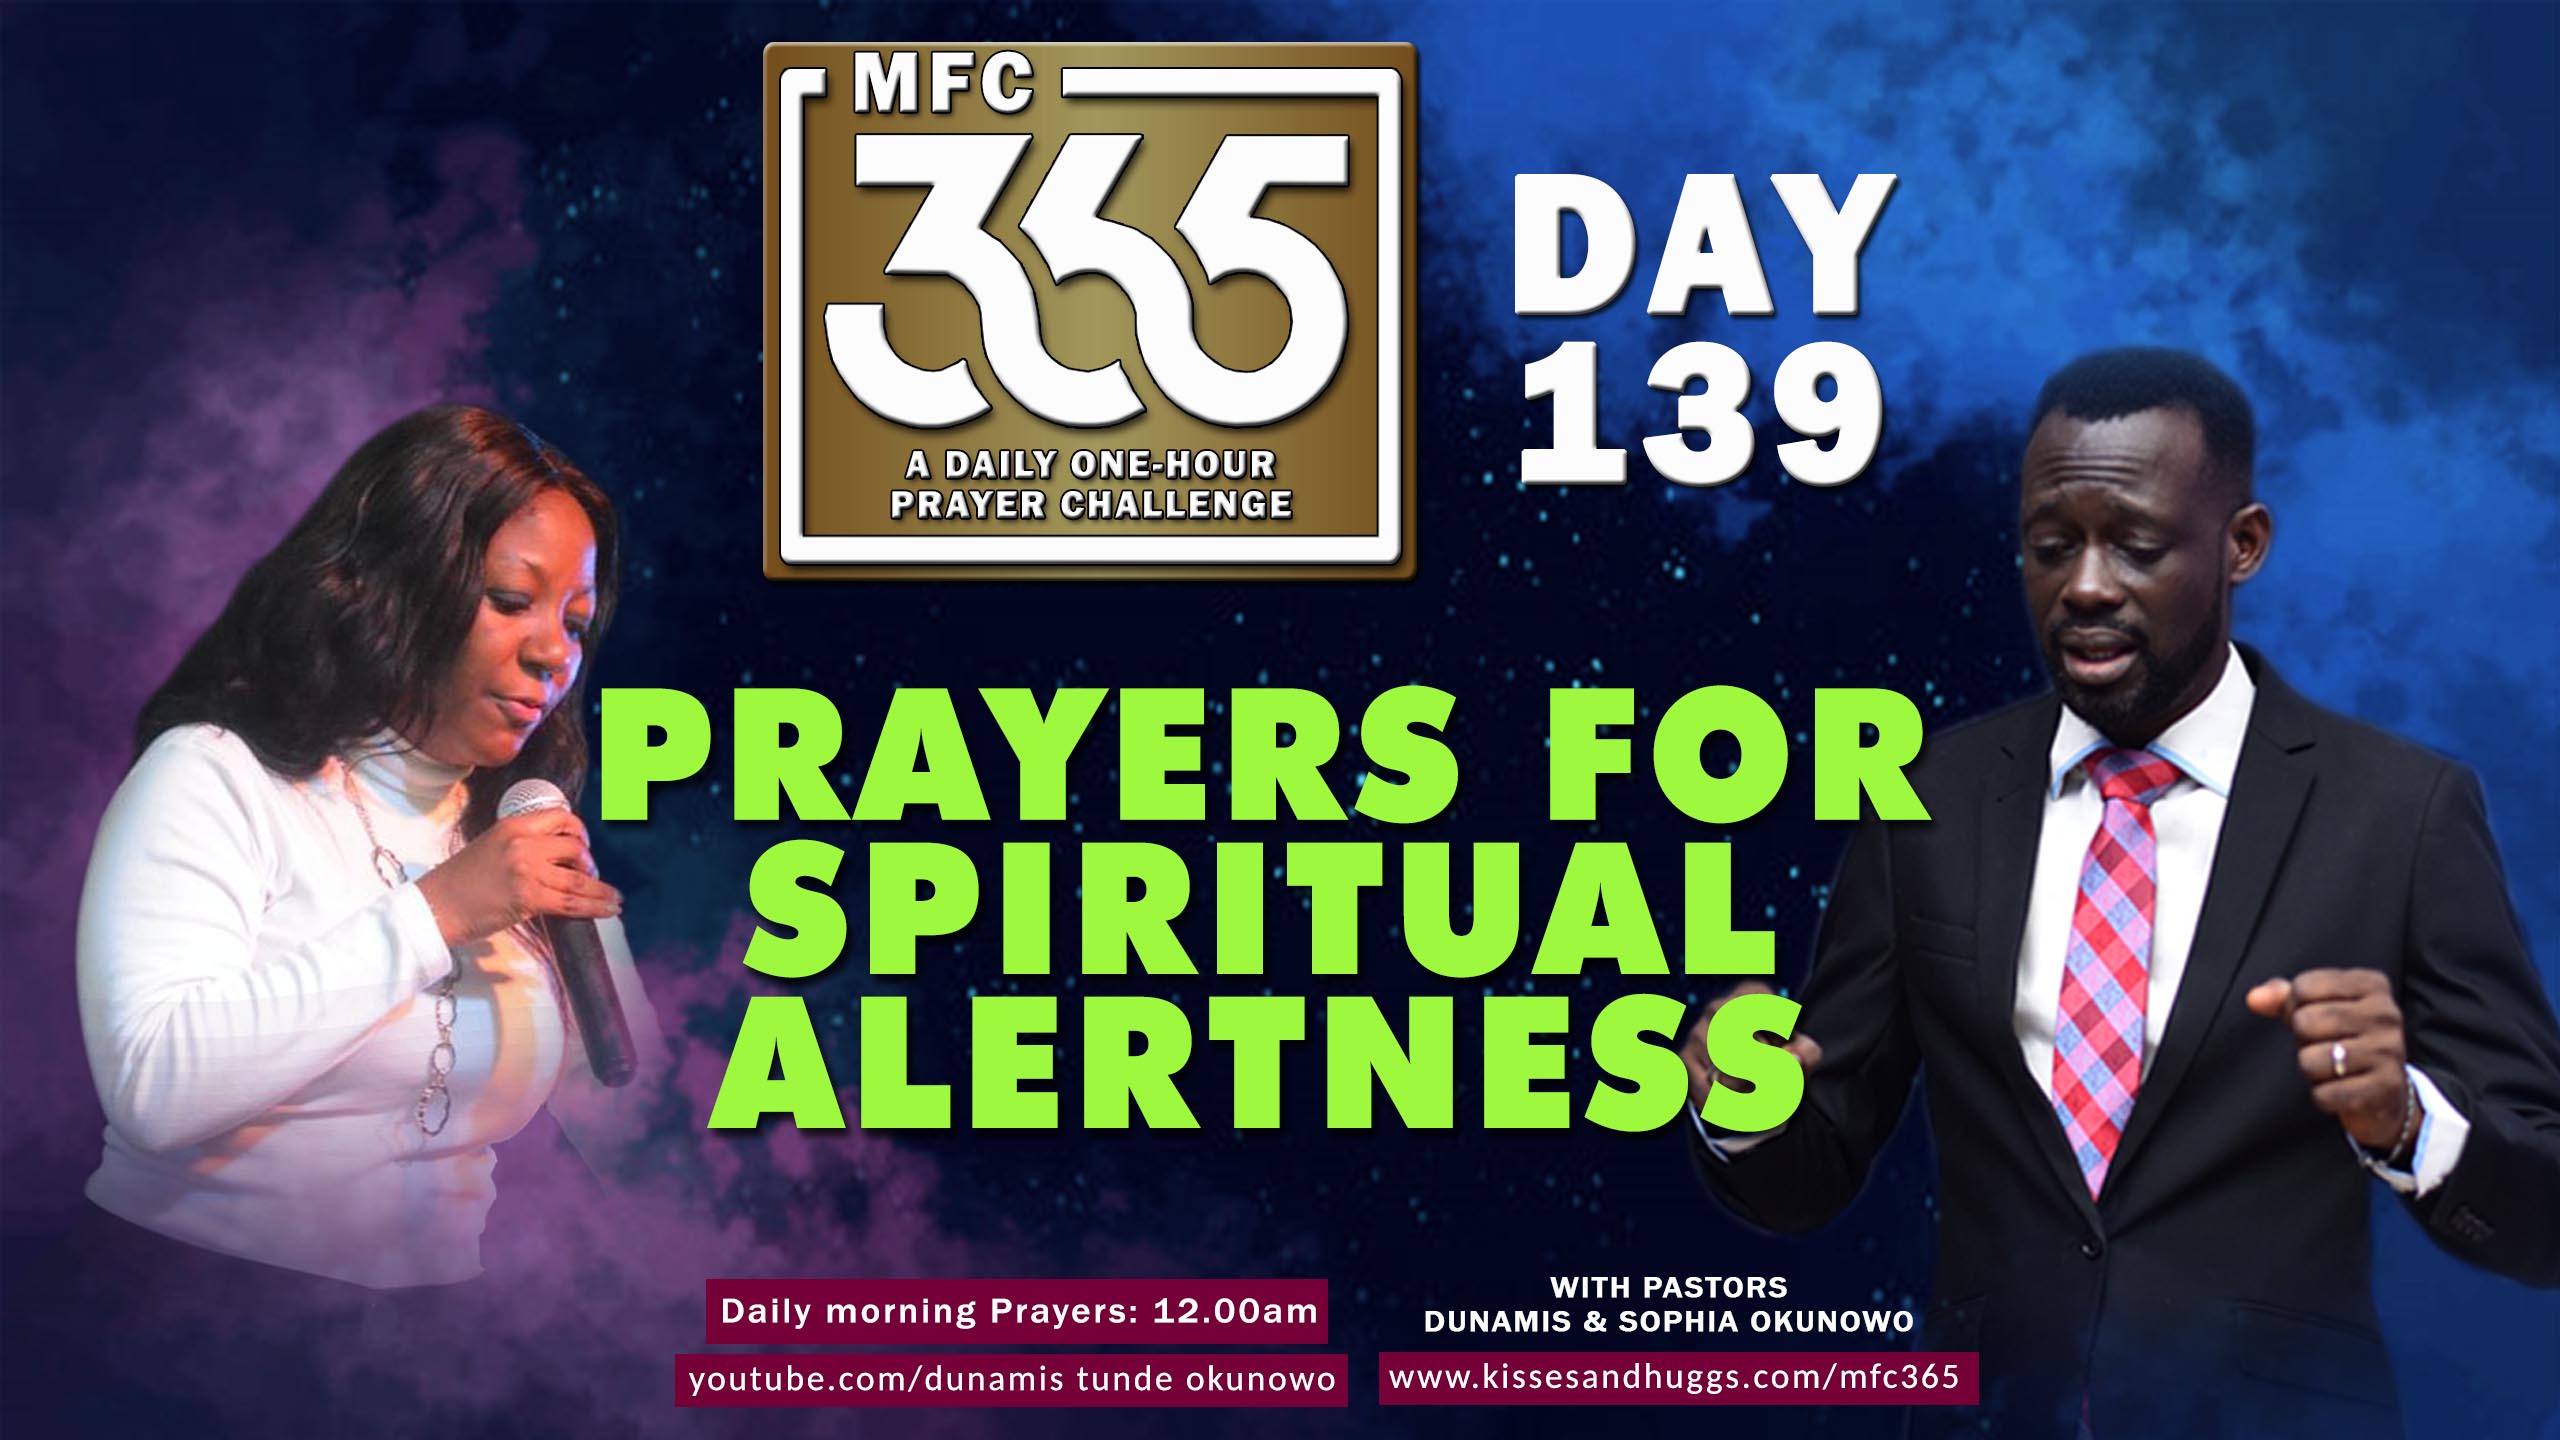 MFC 365 Challenge – Day 139 – Spiritual Alertness